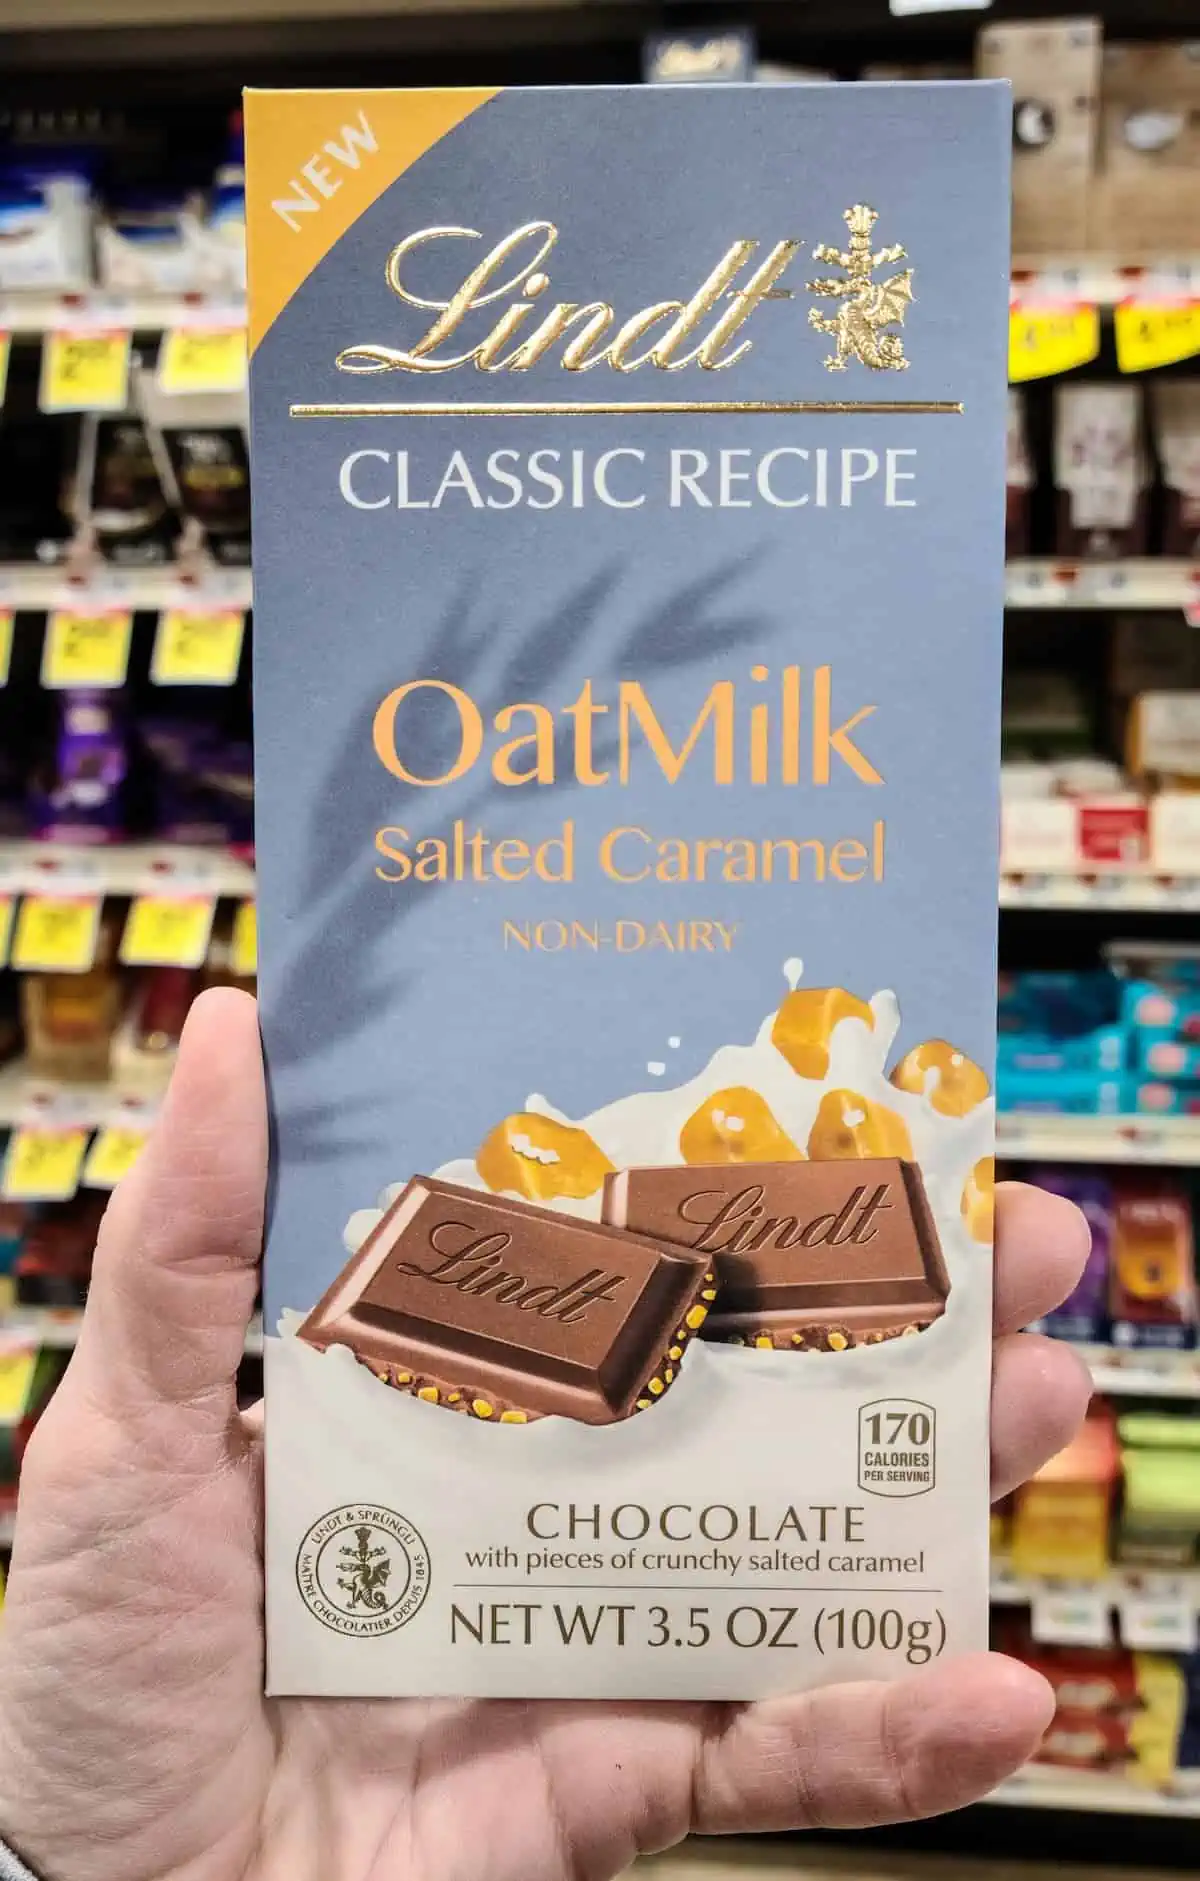 A Lindt brand oat milk vegan chocolate bar.